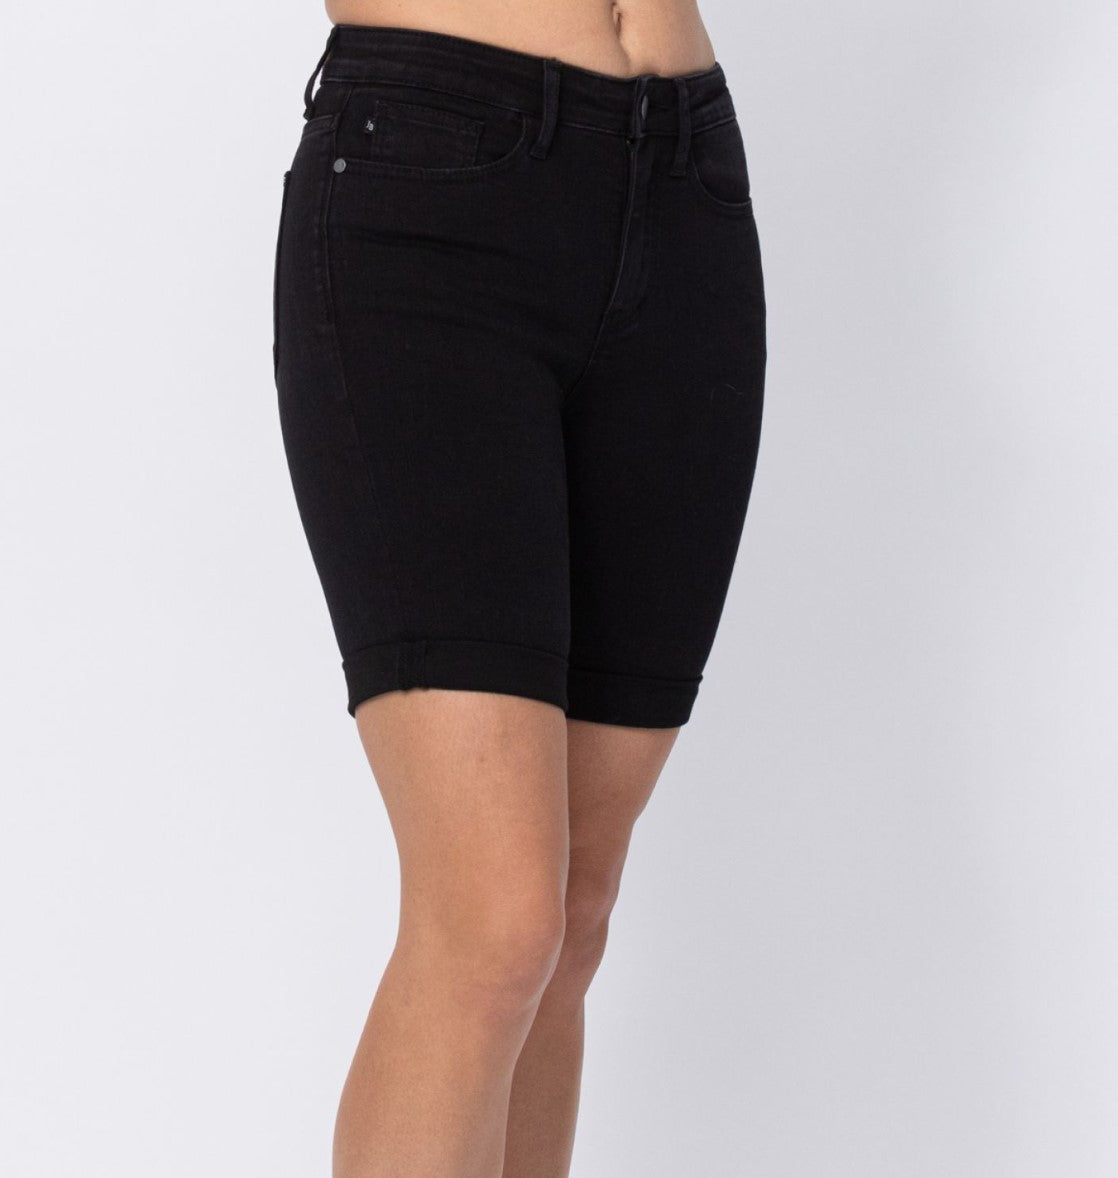 NEW ~ Judy Blue Hi-Rise Black Cuffed Bermuda Shorts - Style #150064REG